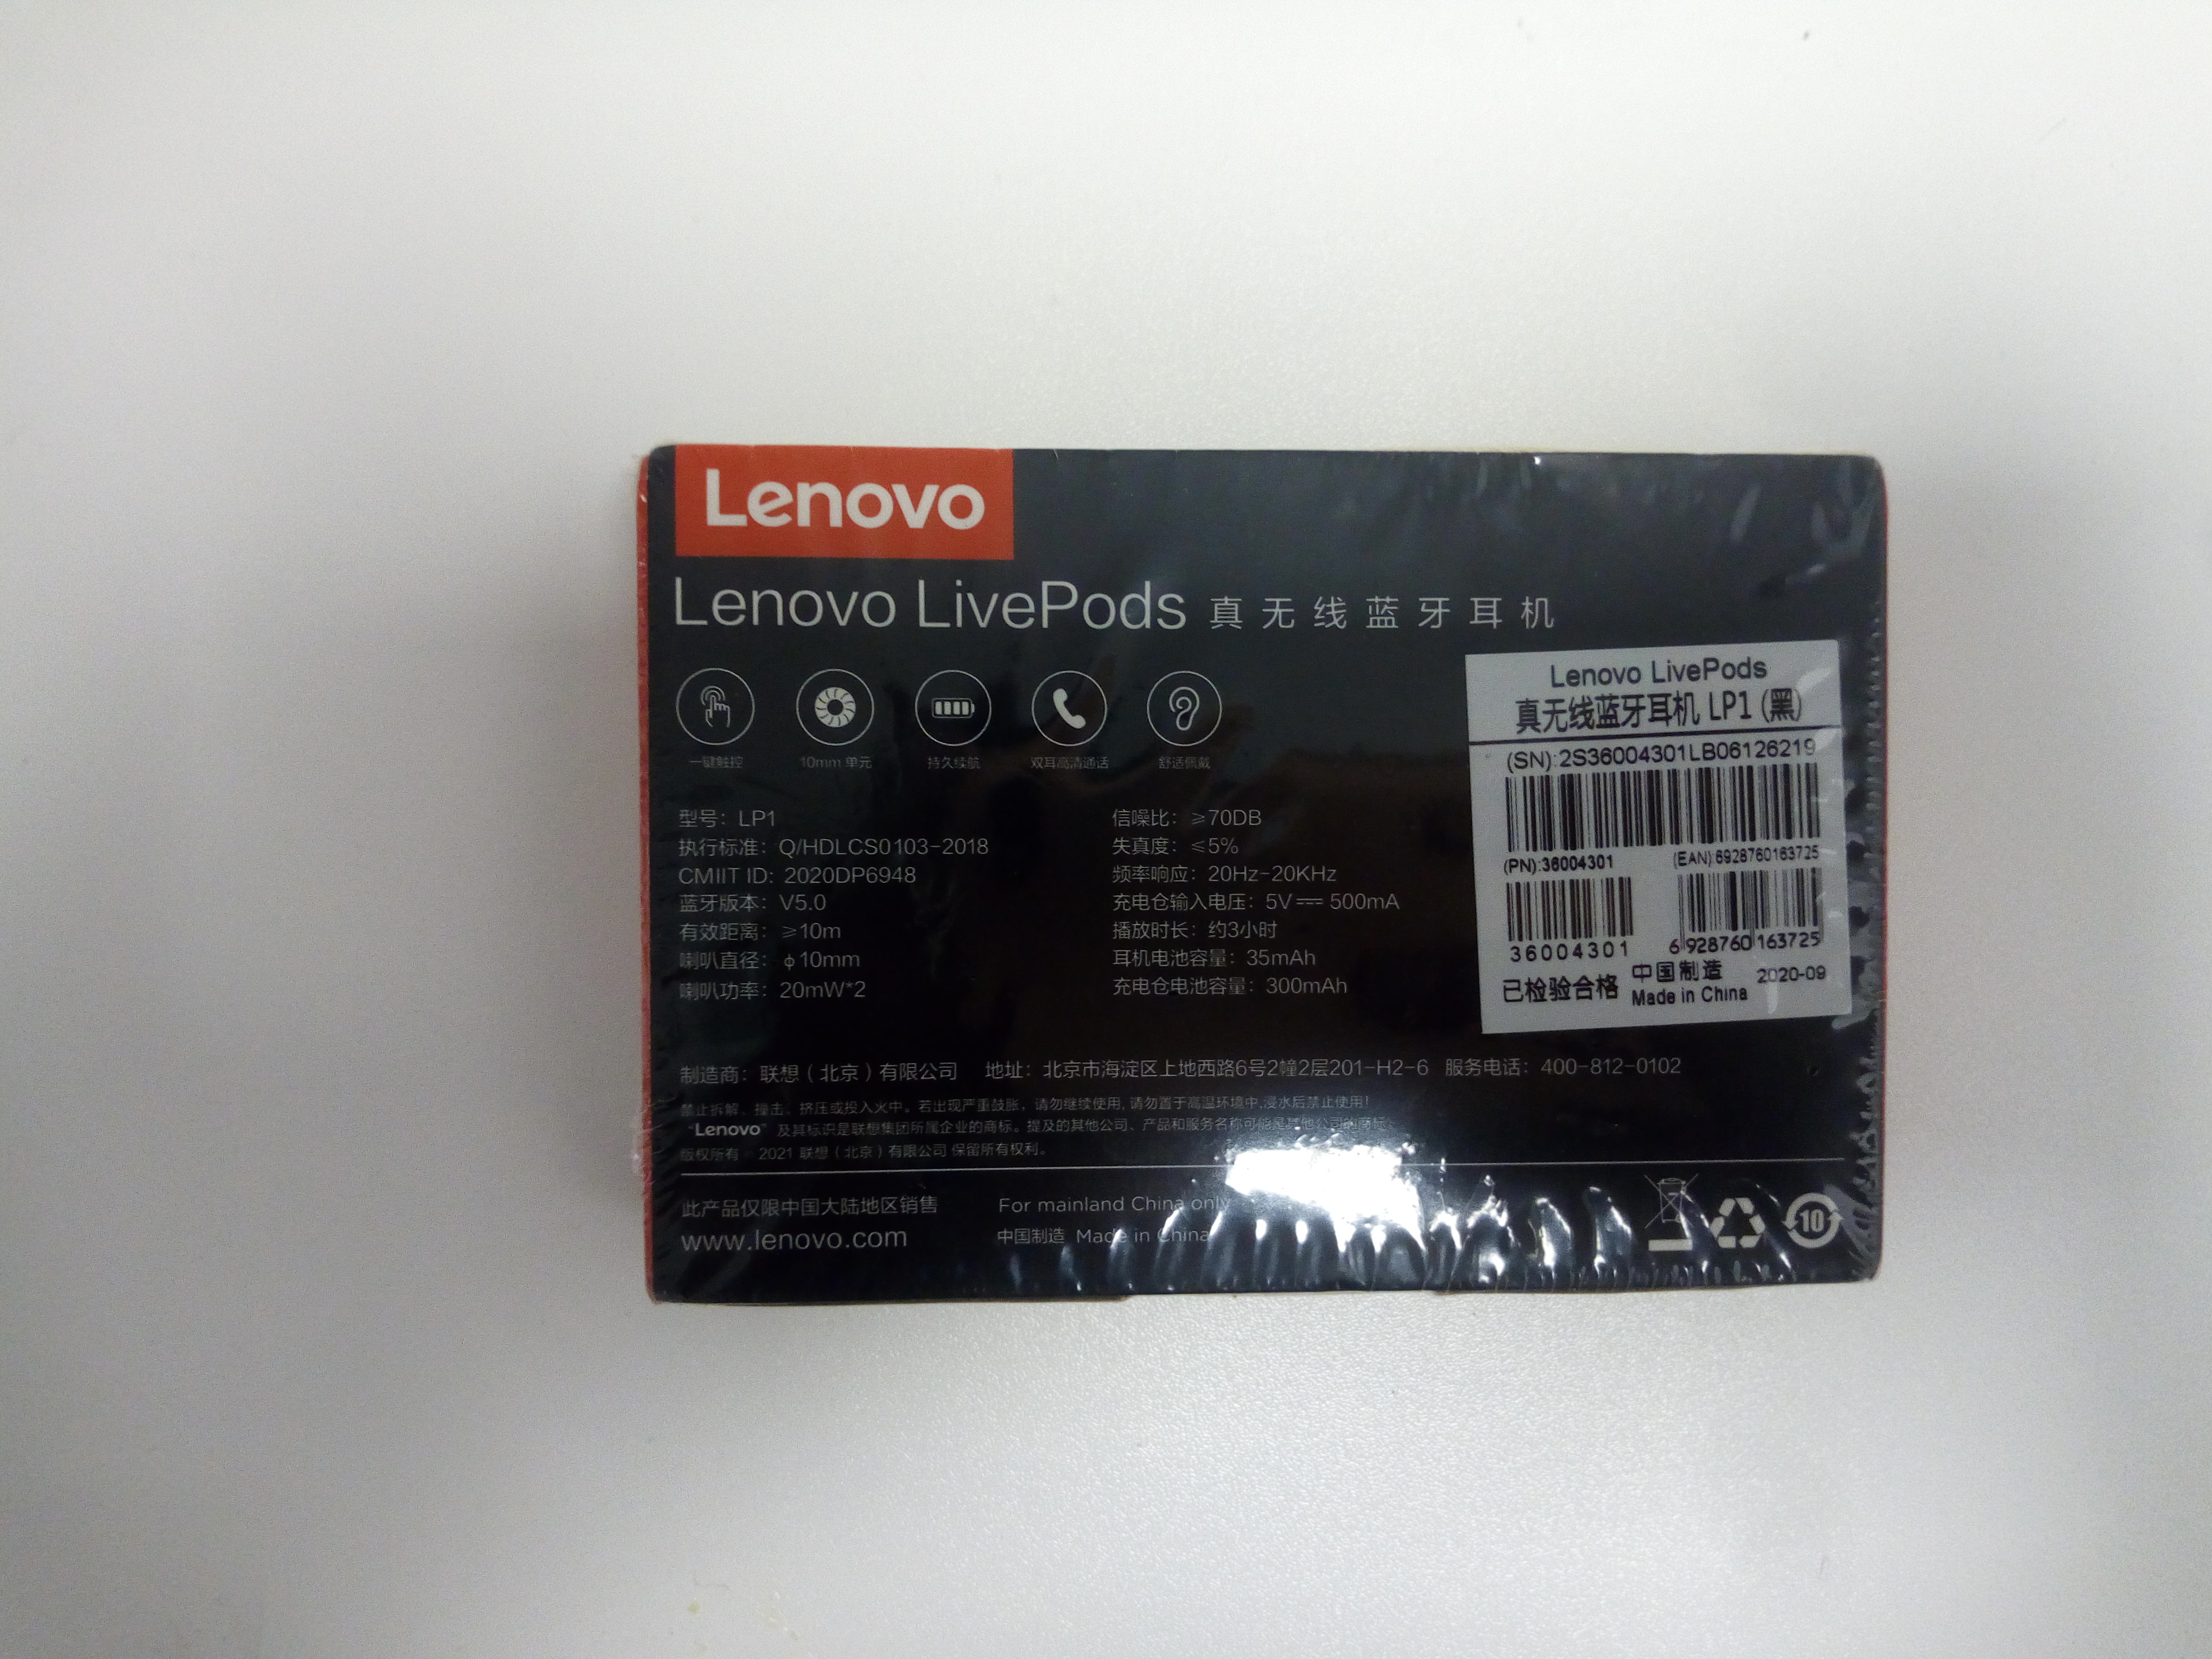 Lenovo LP1S